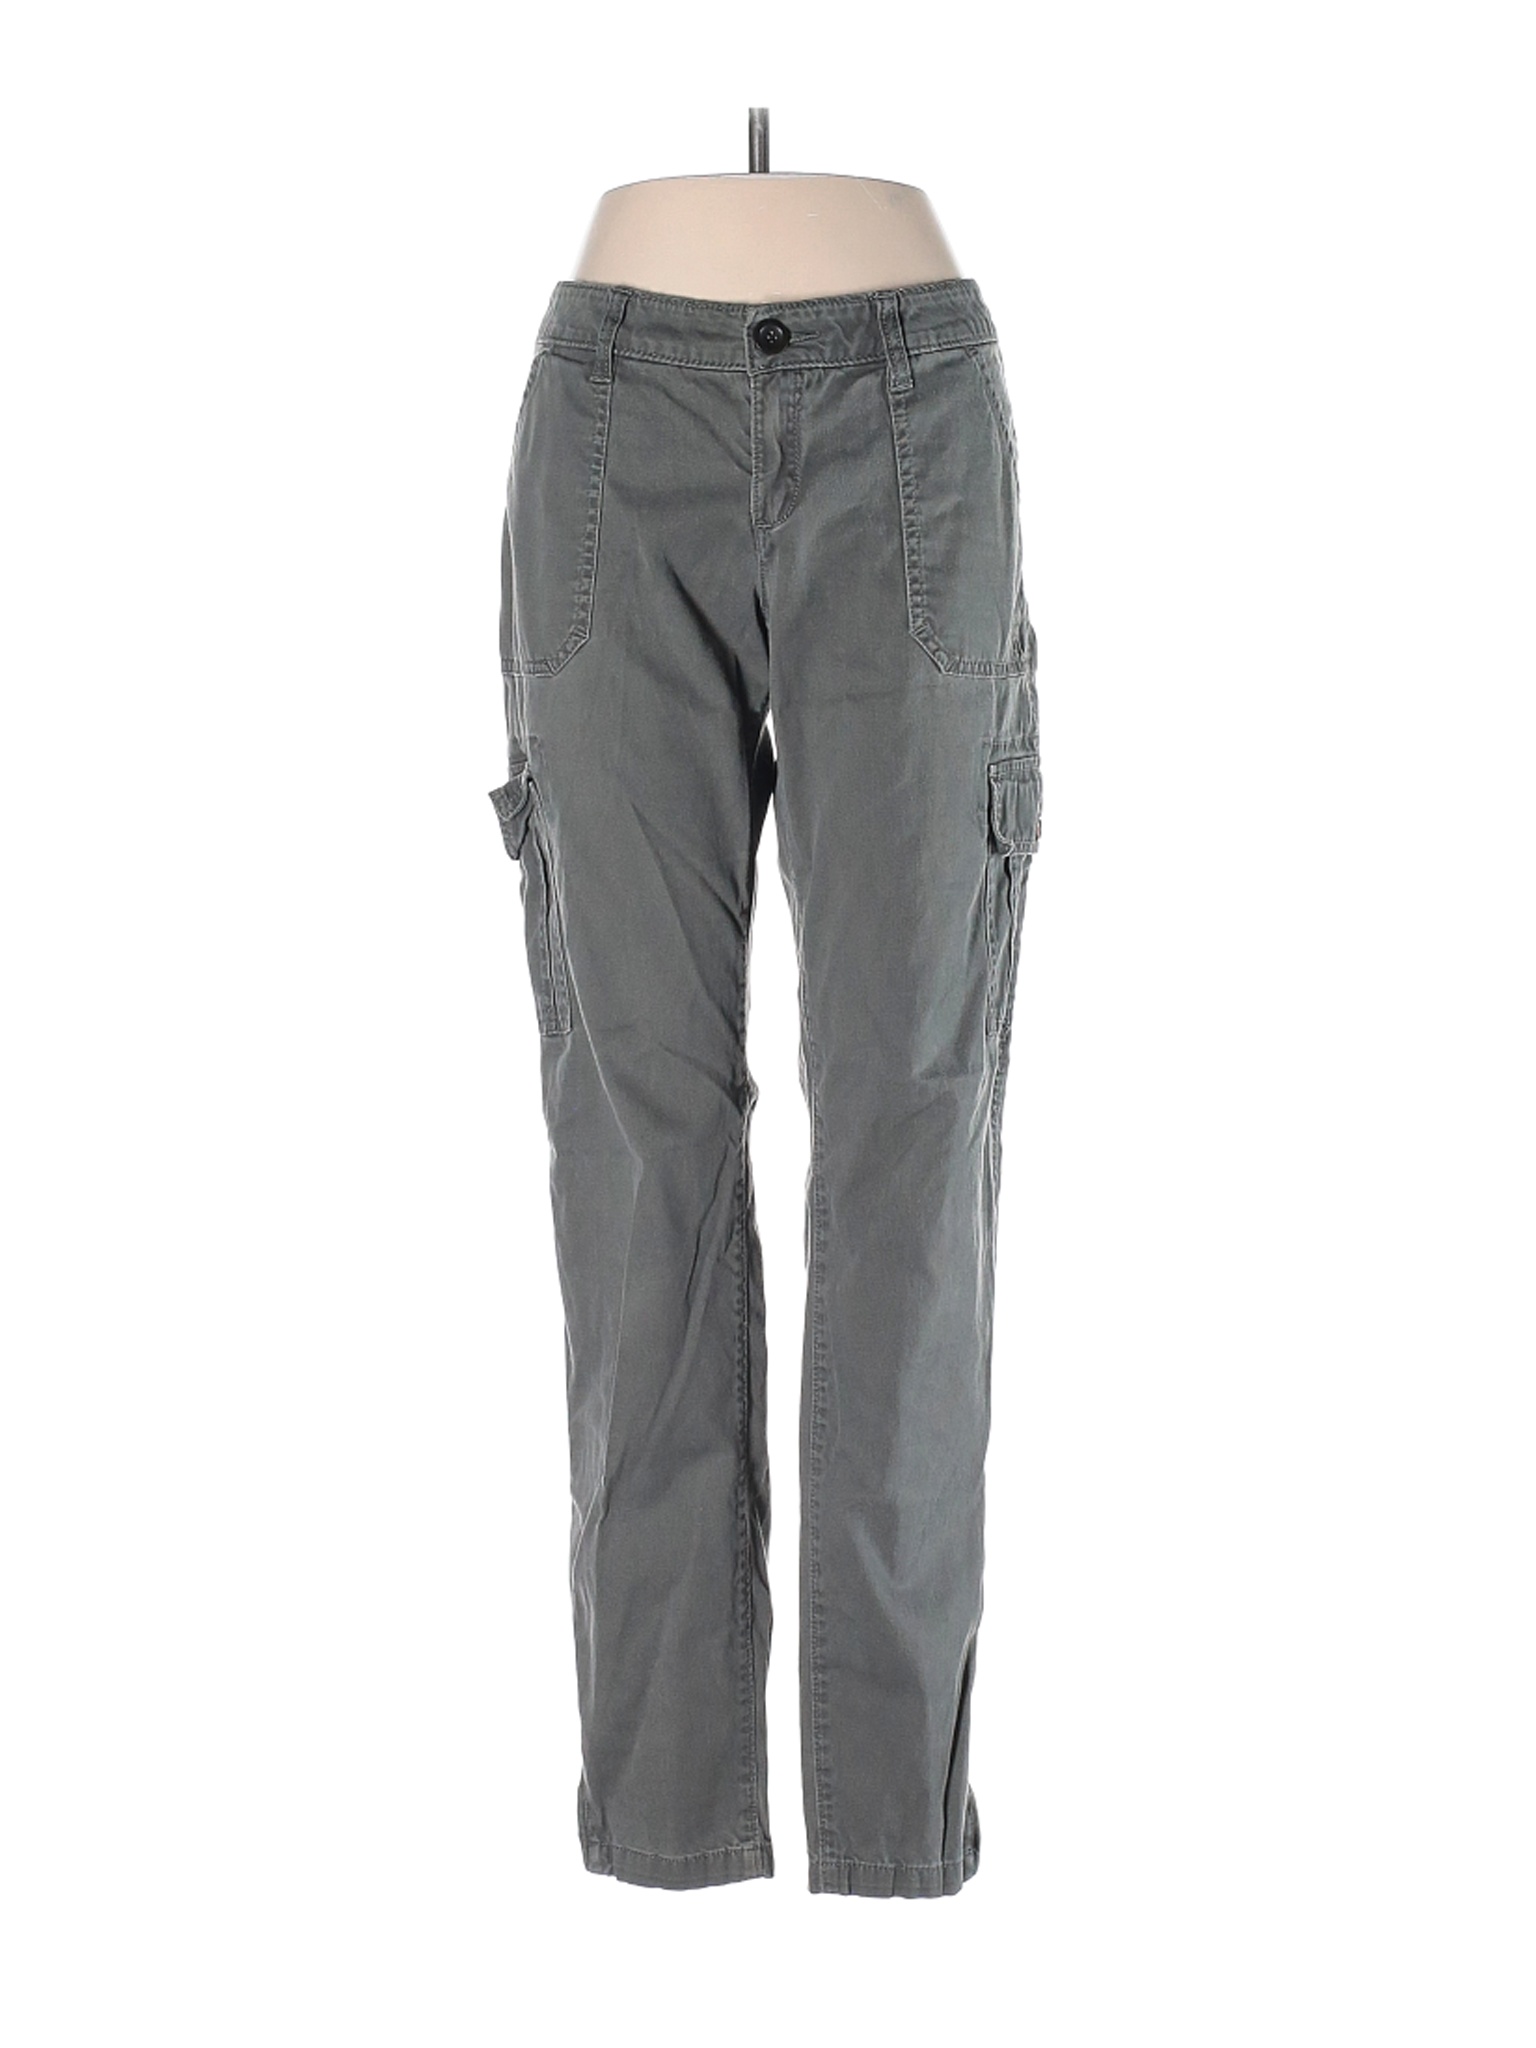 Abercrombie & Fitch Women Gray Cargo Pants 8 | eBay